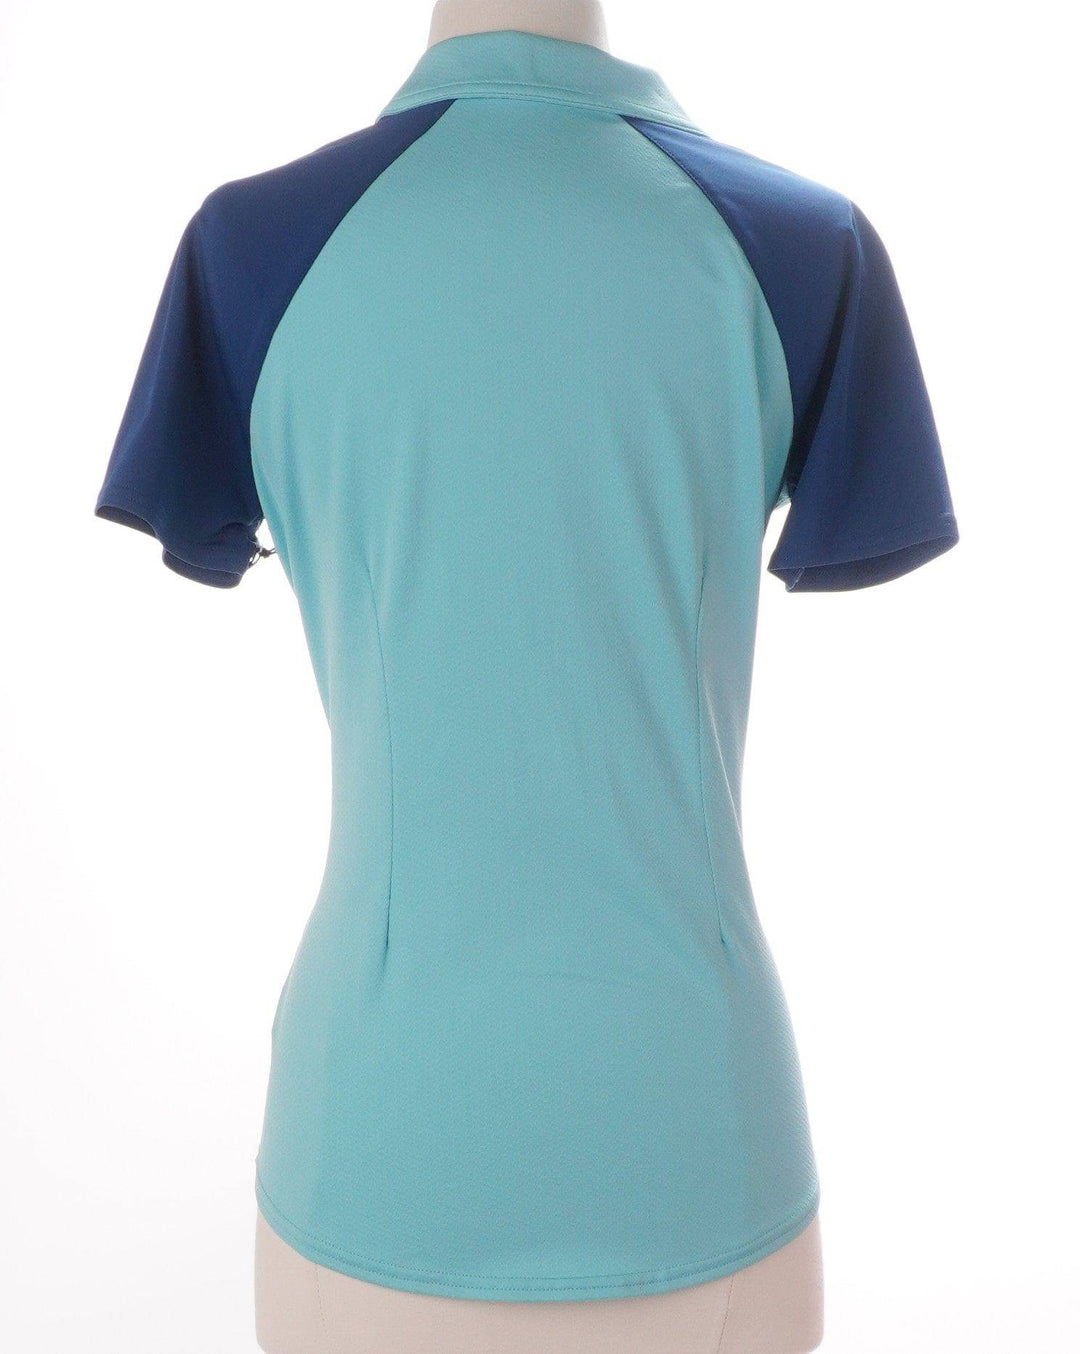 Skorzie Small / Aqua Jofit Short Sleeve Top Exclusive Product -  Vera Polo Spearmint- Size Small Apparel & Accessories